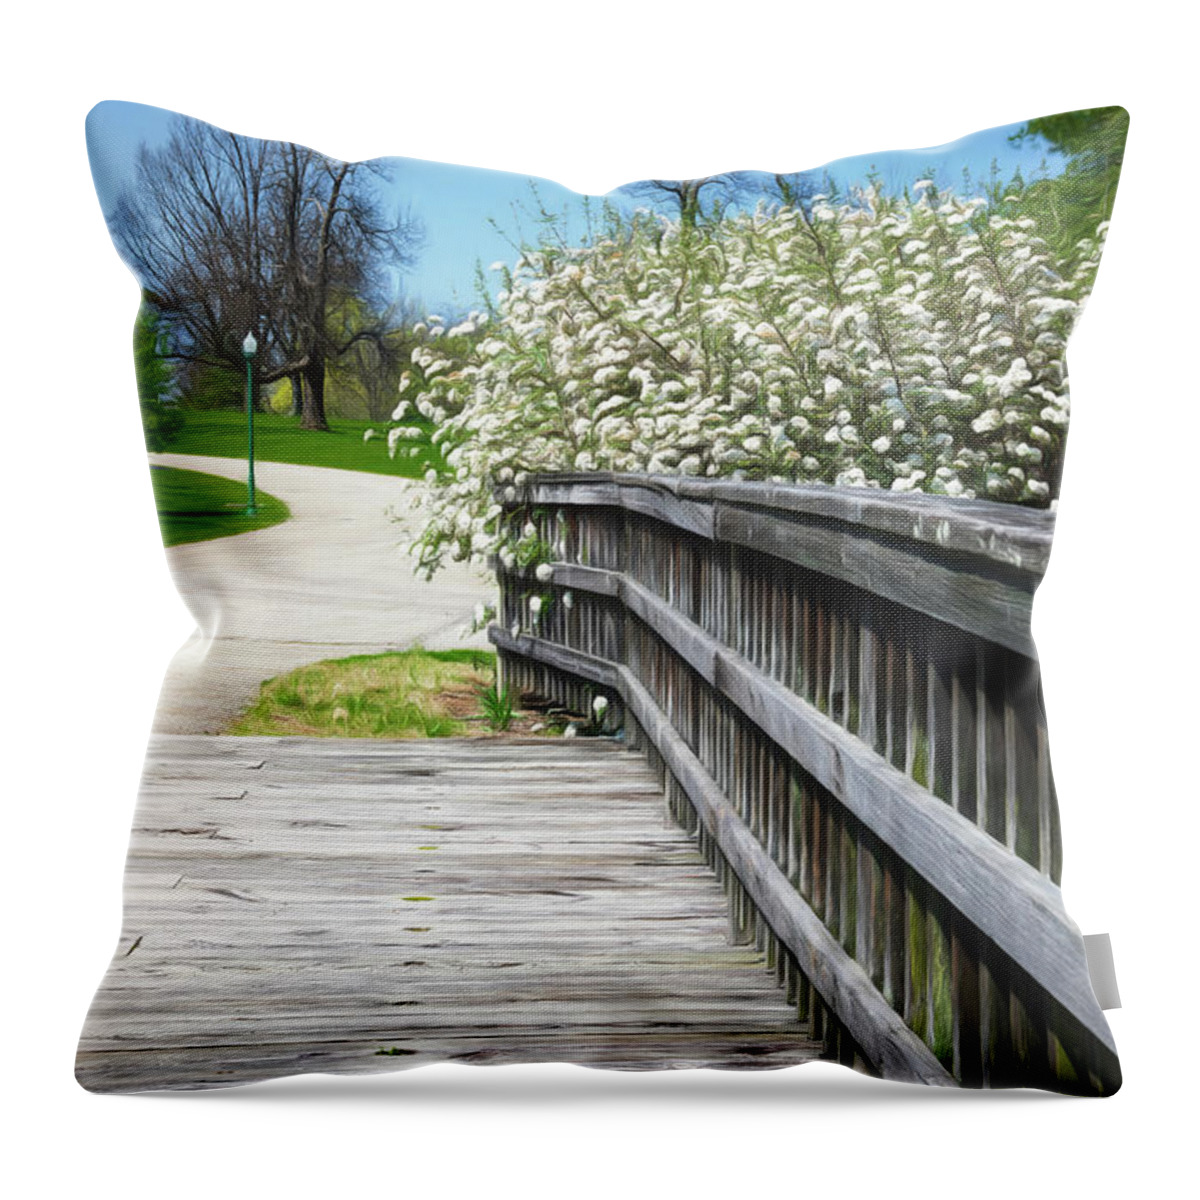 Botanical Gardens Throw Pillow featuring the photograph Franklin Park Conservatory Footbridge by Tom Mc Nemar